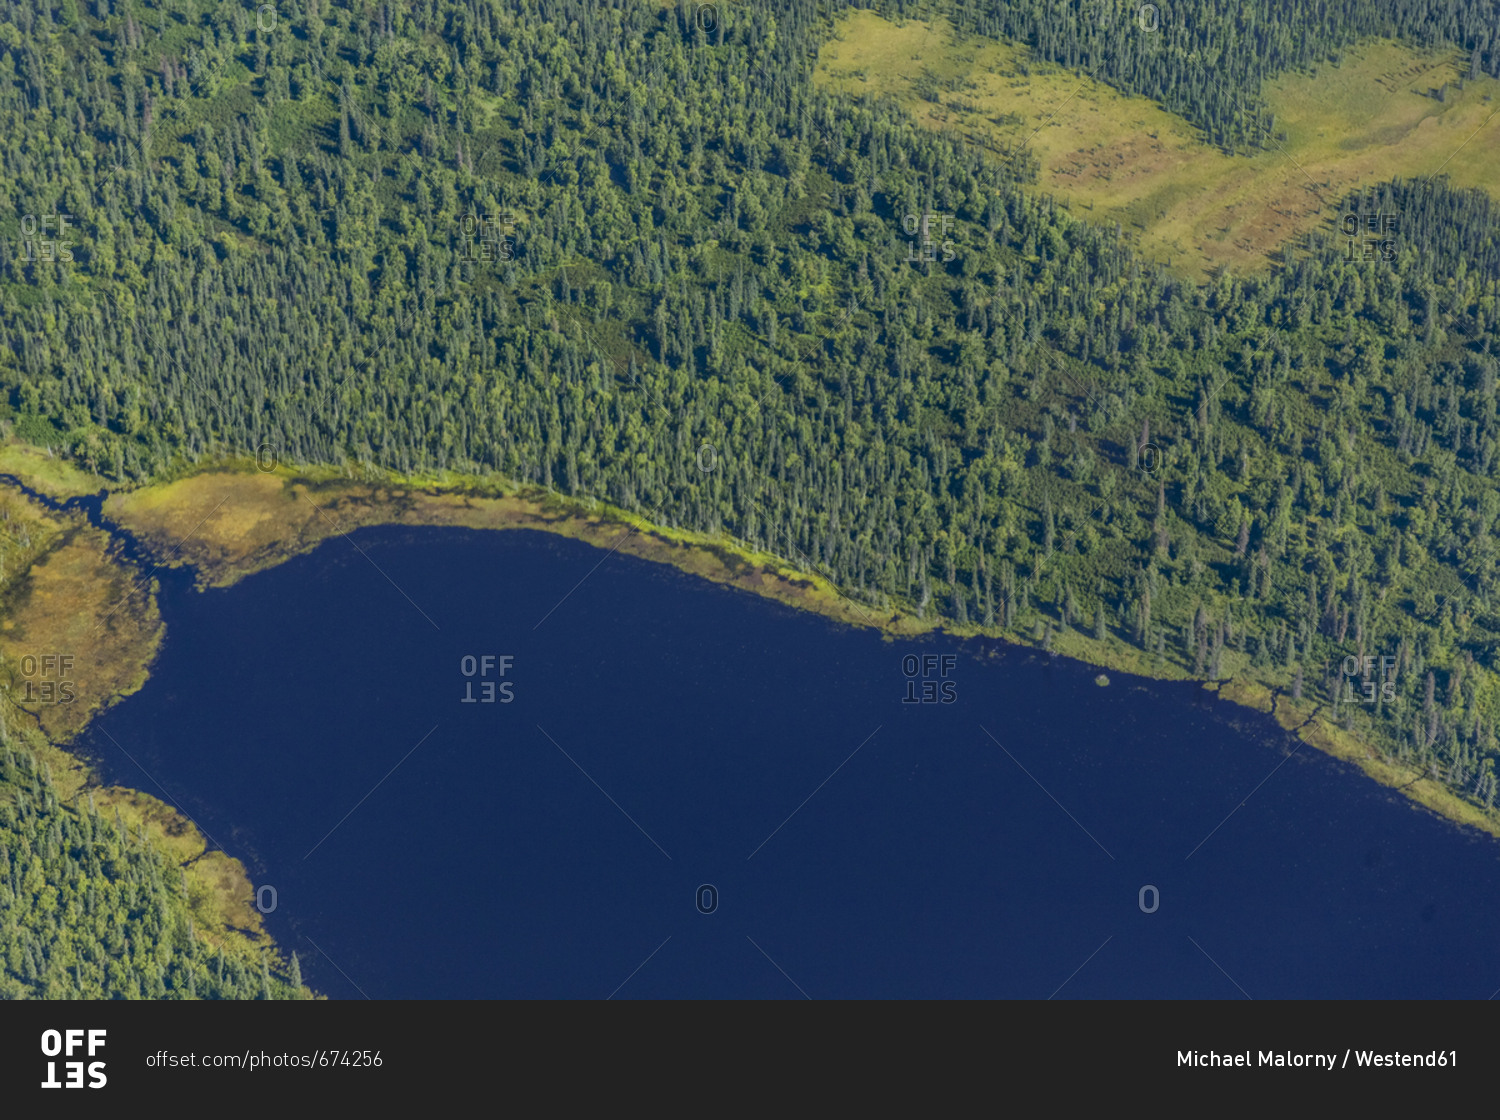 USA- Alaska- Talkeetna: Aerial view of river and forest landscape